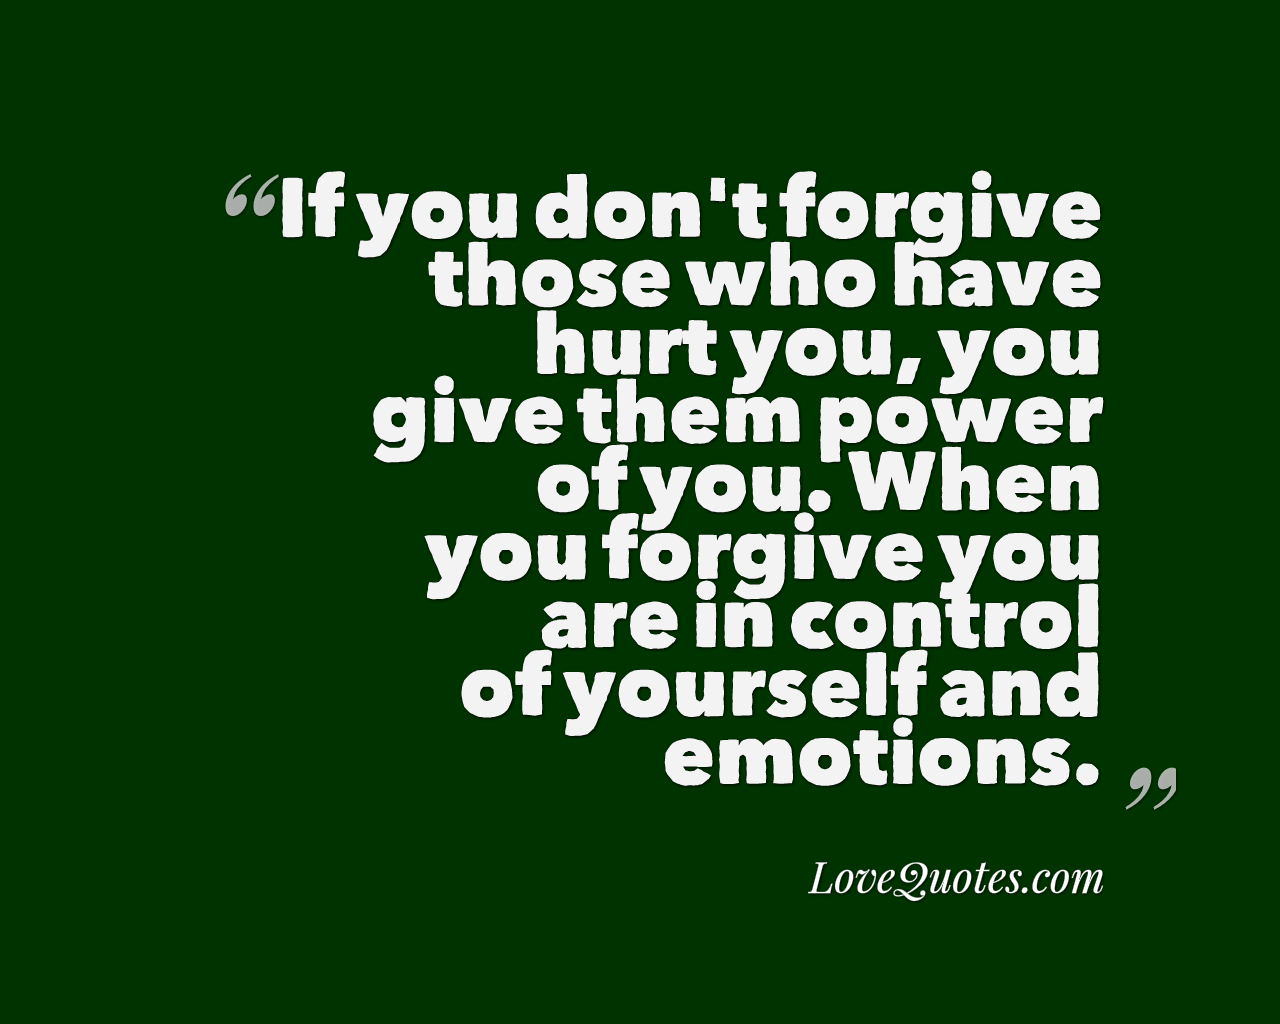 When You Forgive